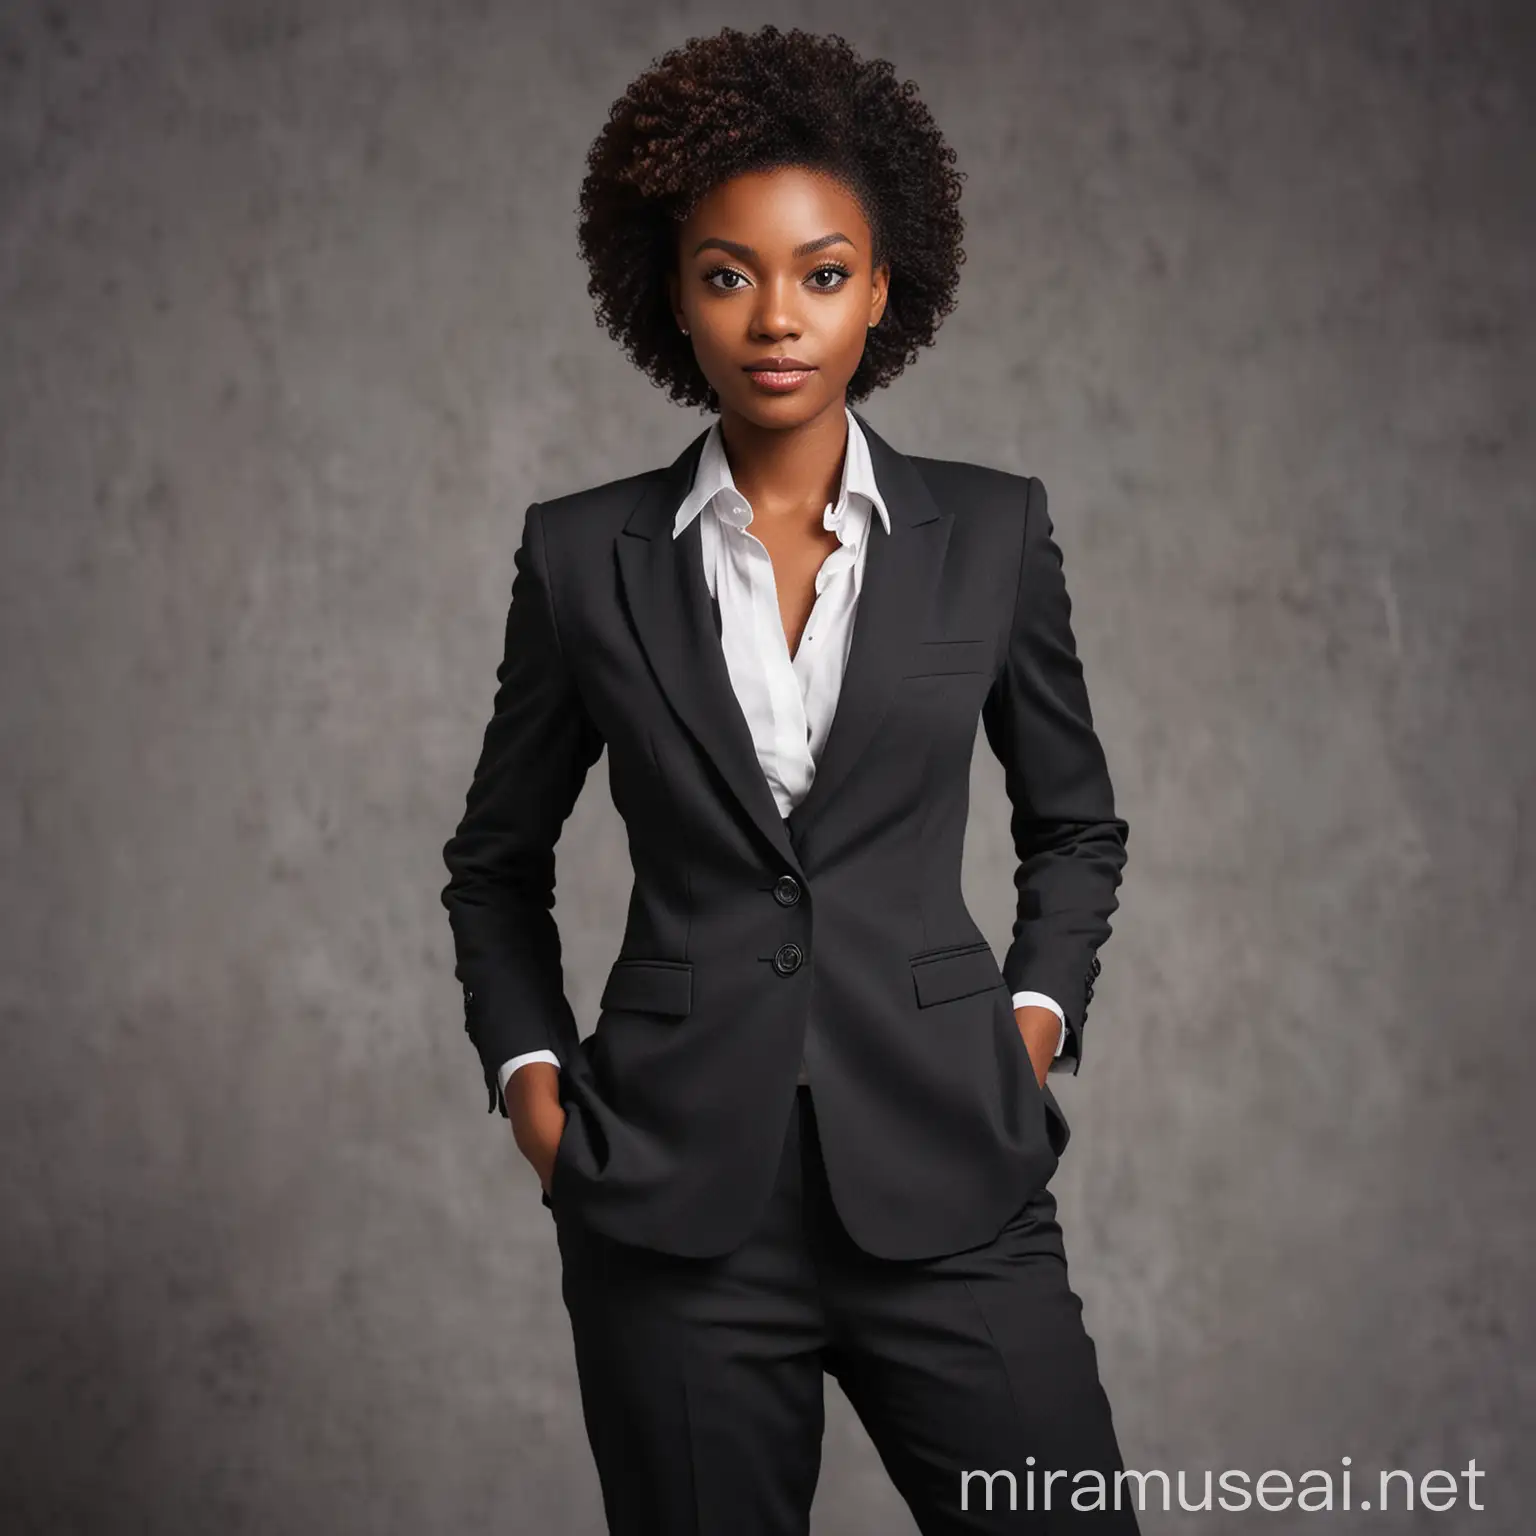 Professional Black Woman in Business Attire